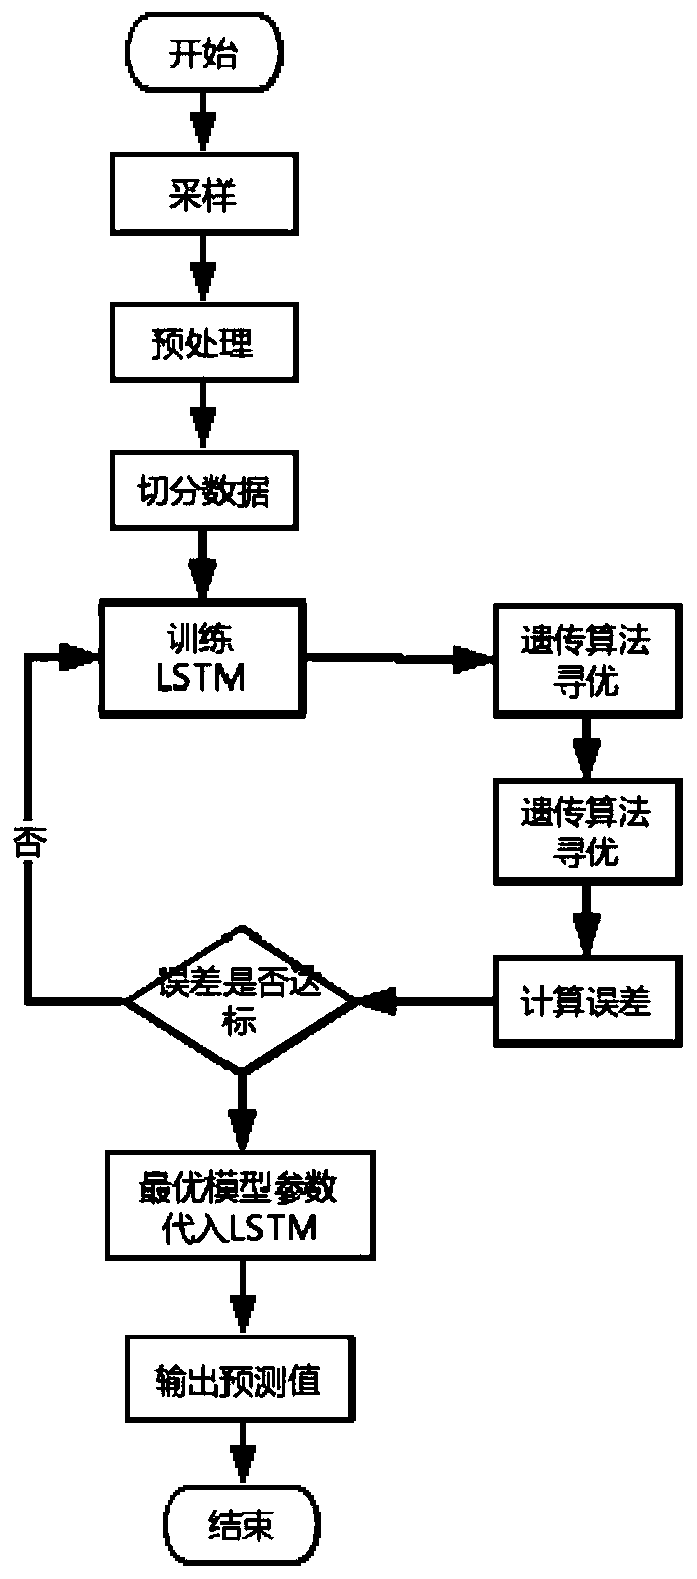 Steam turbine health state prediction method based on E-LSTM